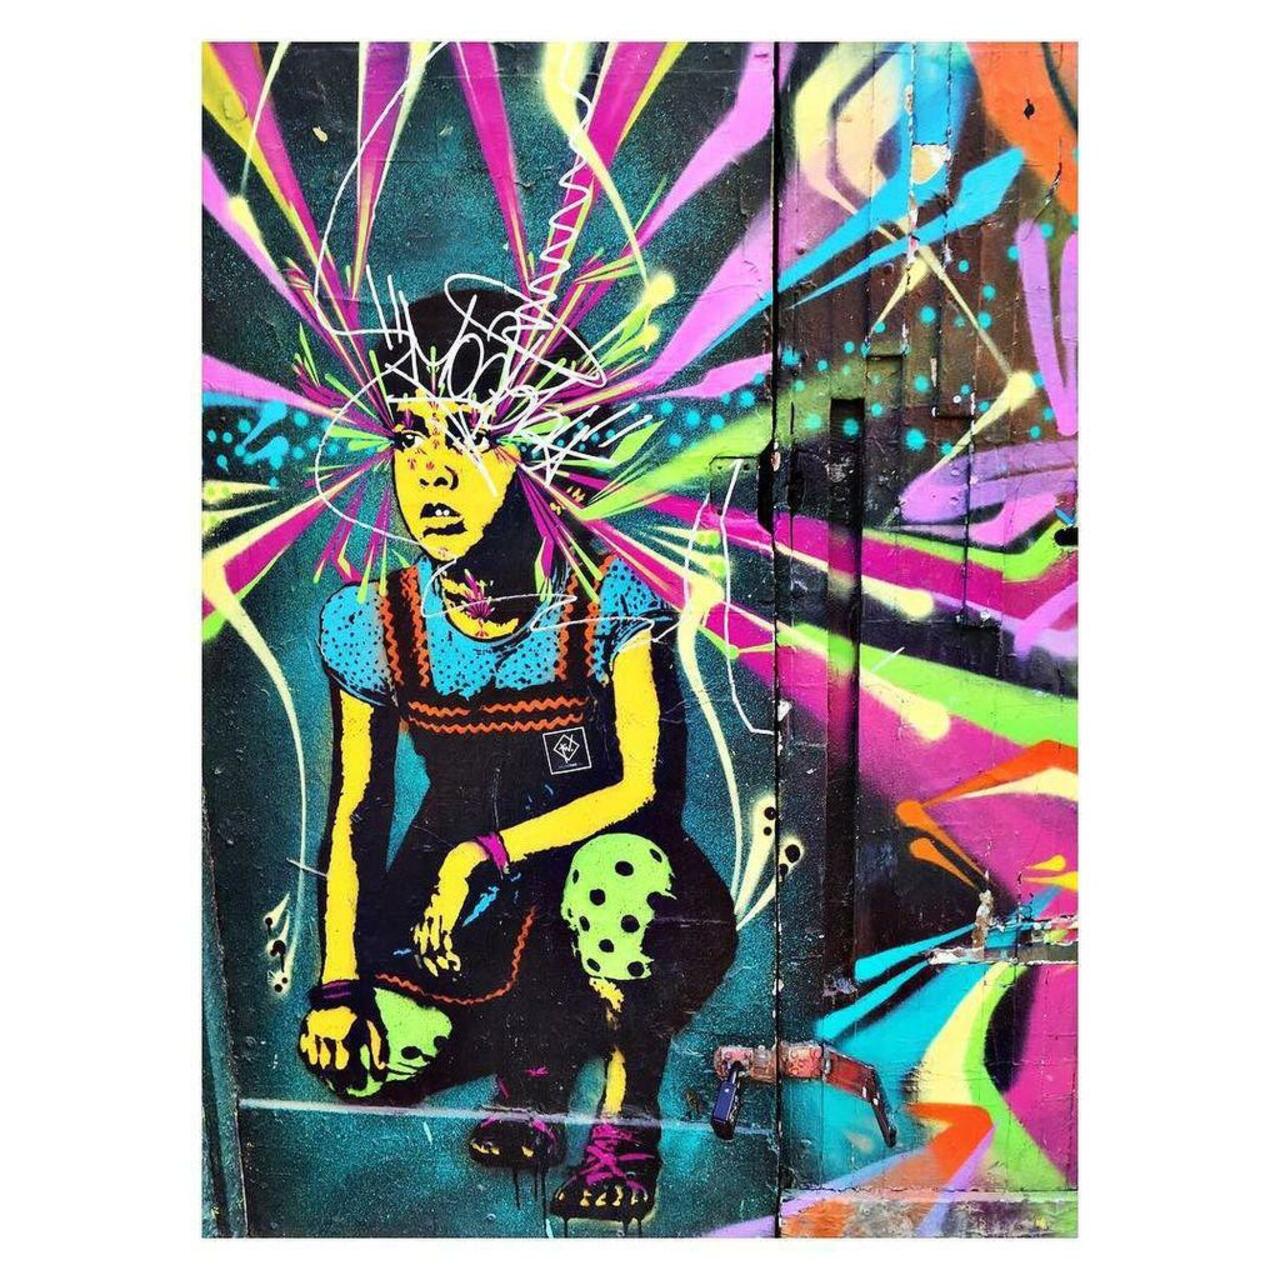 ⚡️⚡️ #streetart #graffiti #paint #spraypaint #wall #mural #wallmural #bricklane #shoreditch #eastlondon #urban #u… http://t.co/dXsCXmciLG